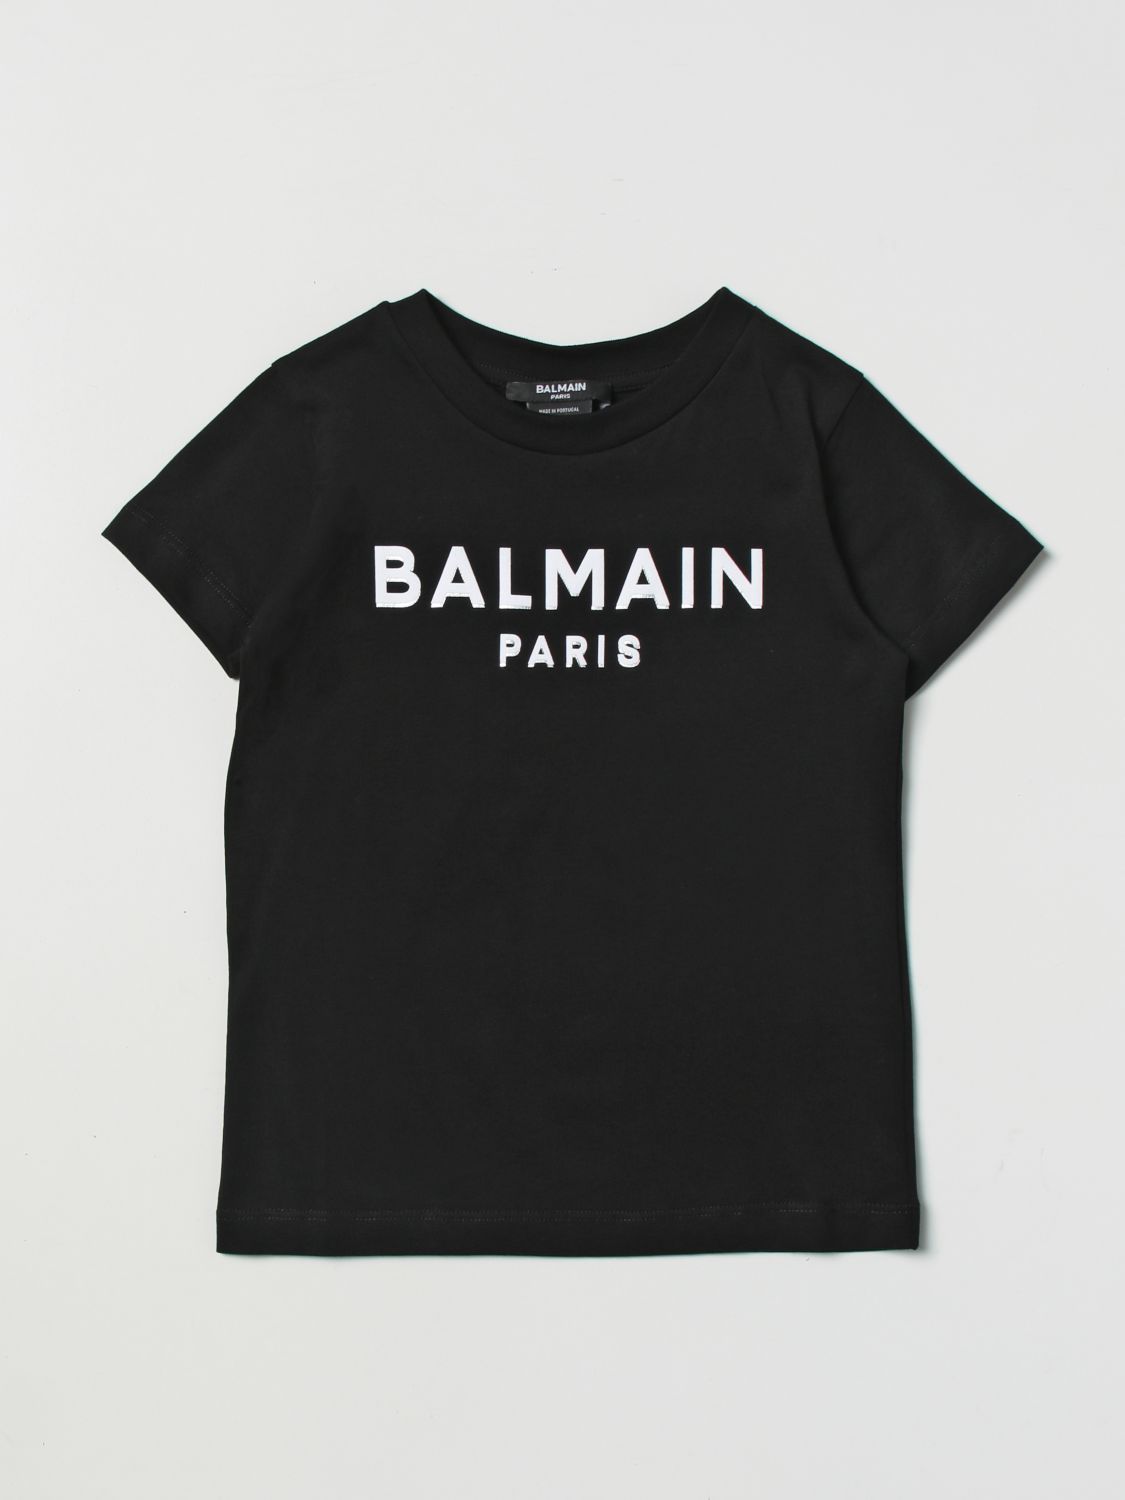 Balmain T-shirt  Kids Kids Color Black